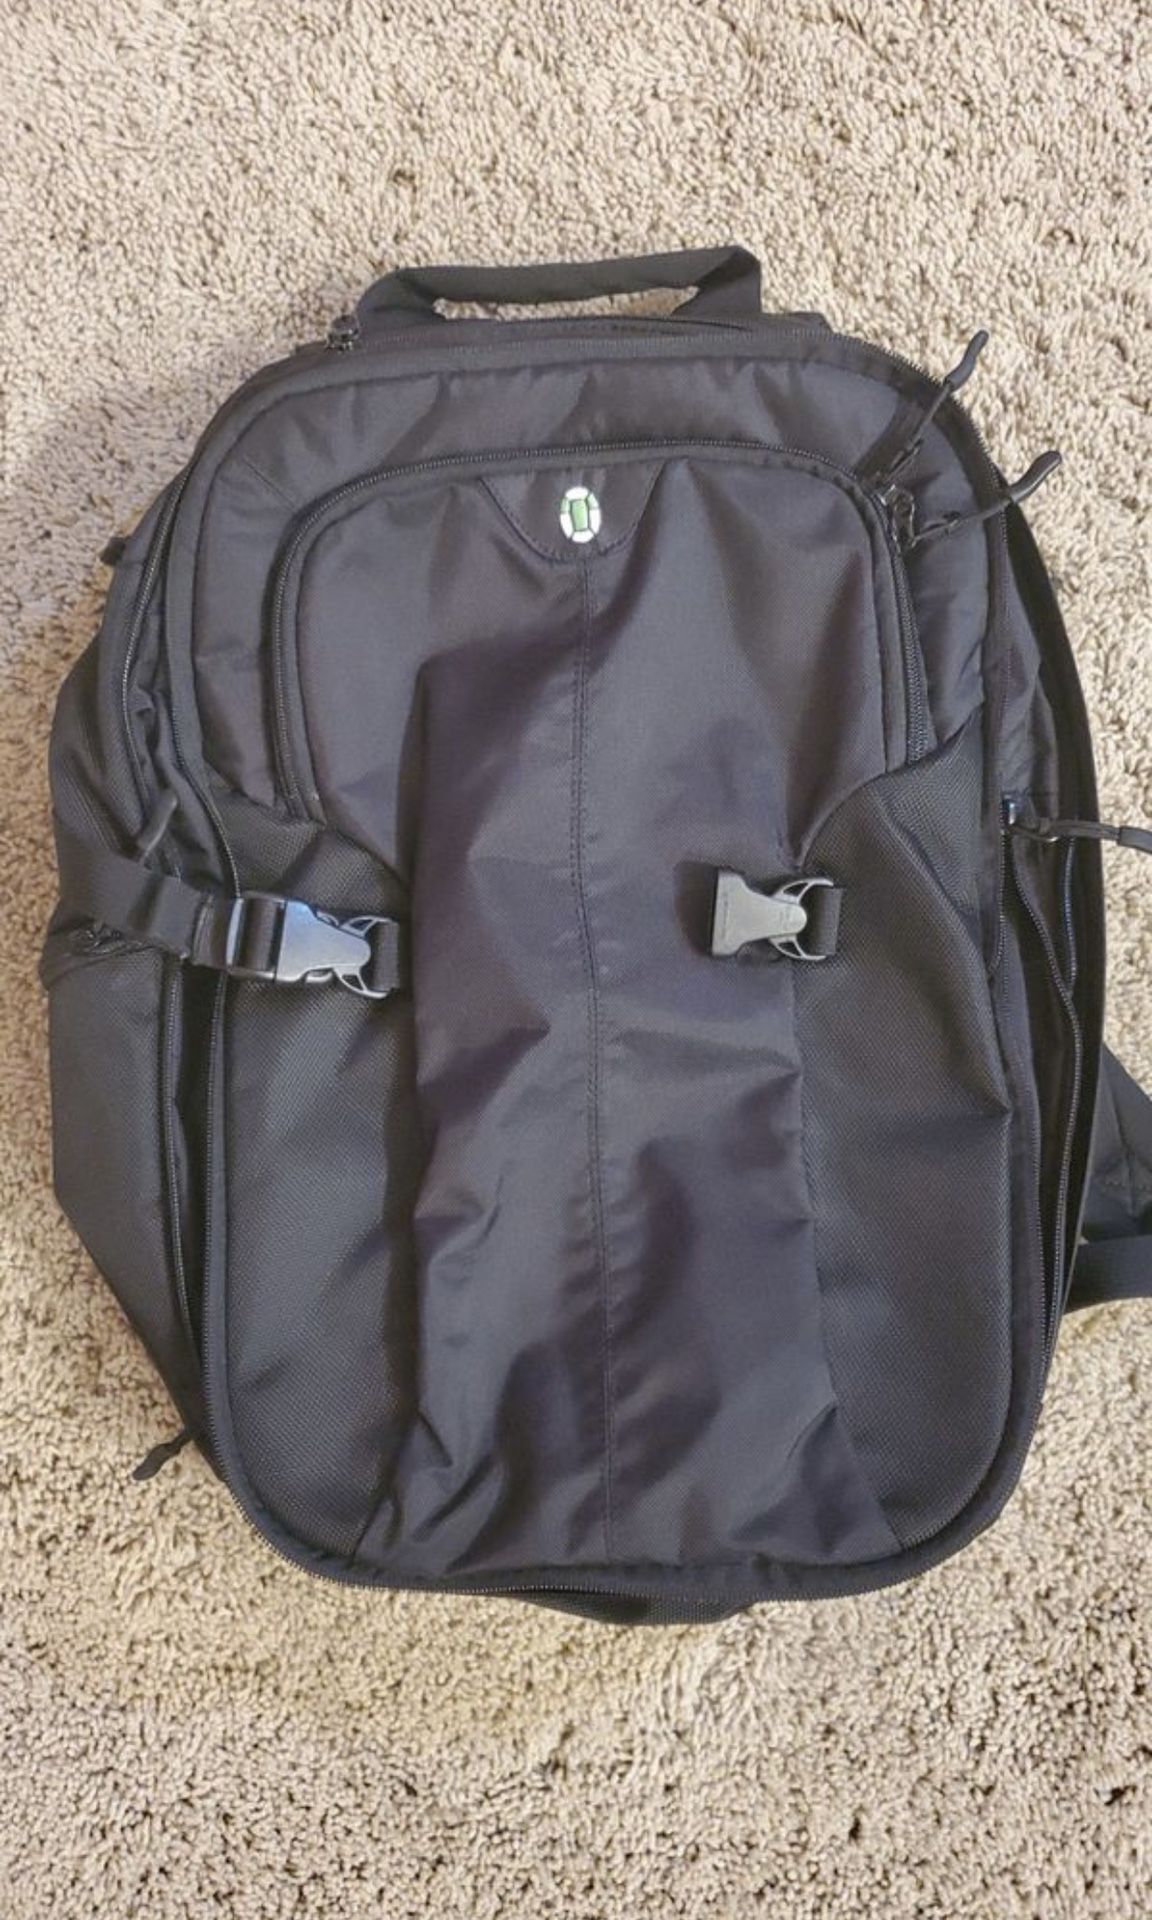 Tortuga expandable hiking travel backpack